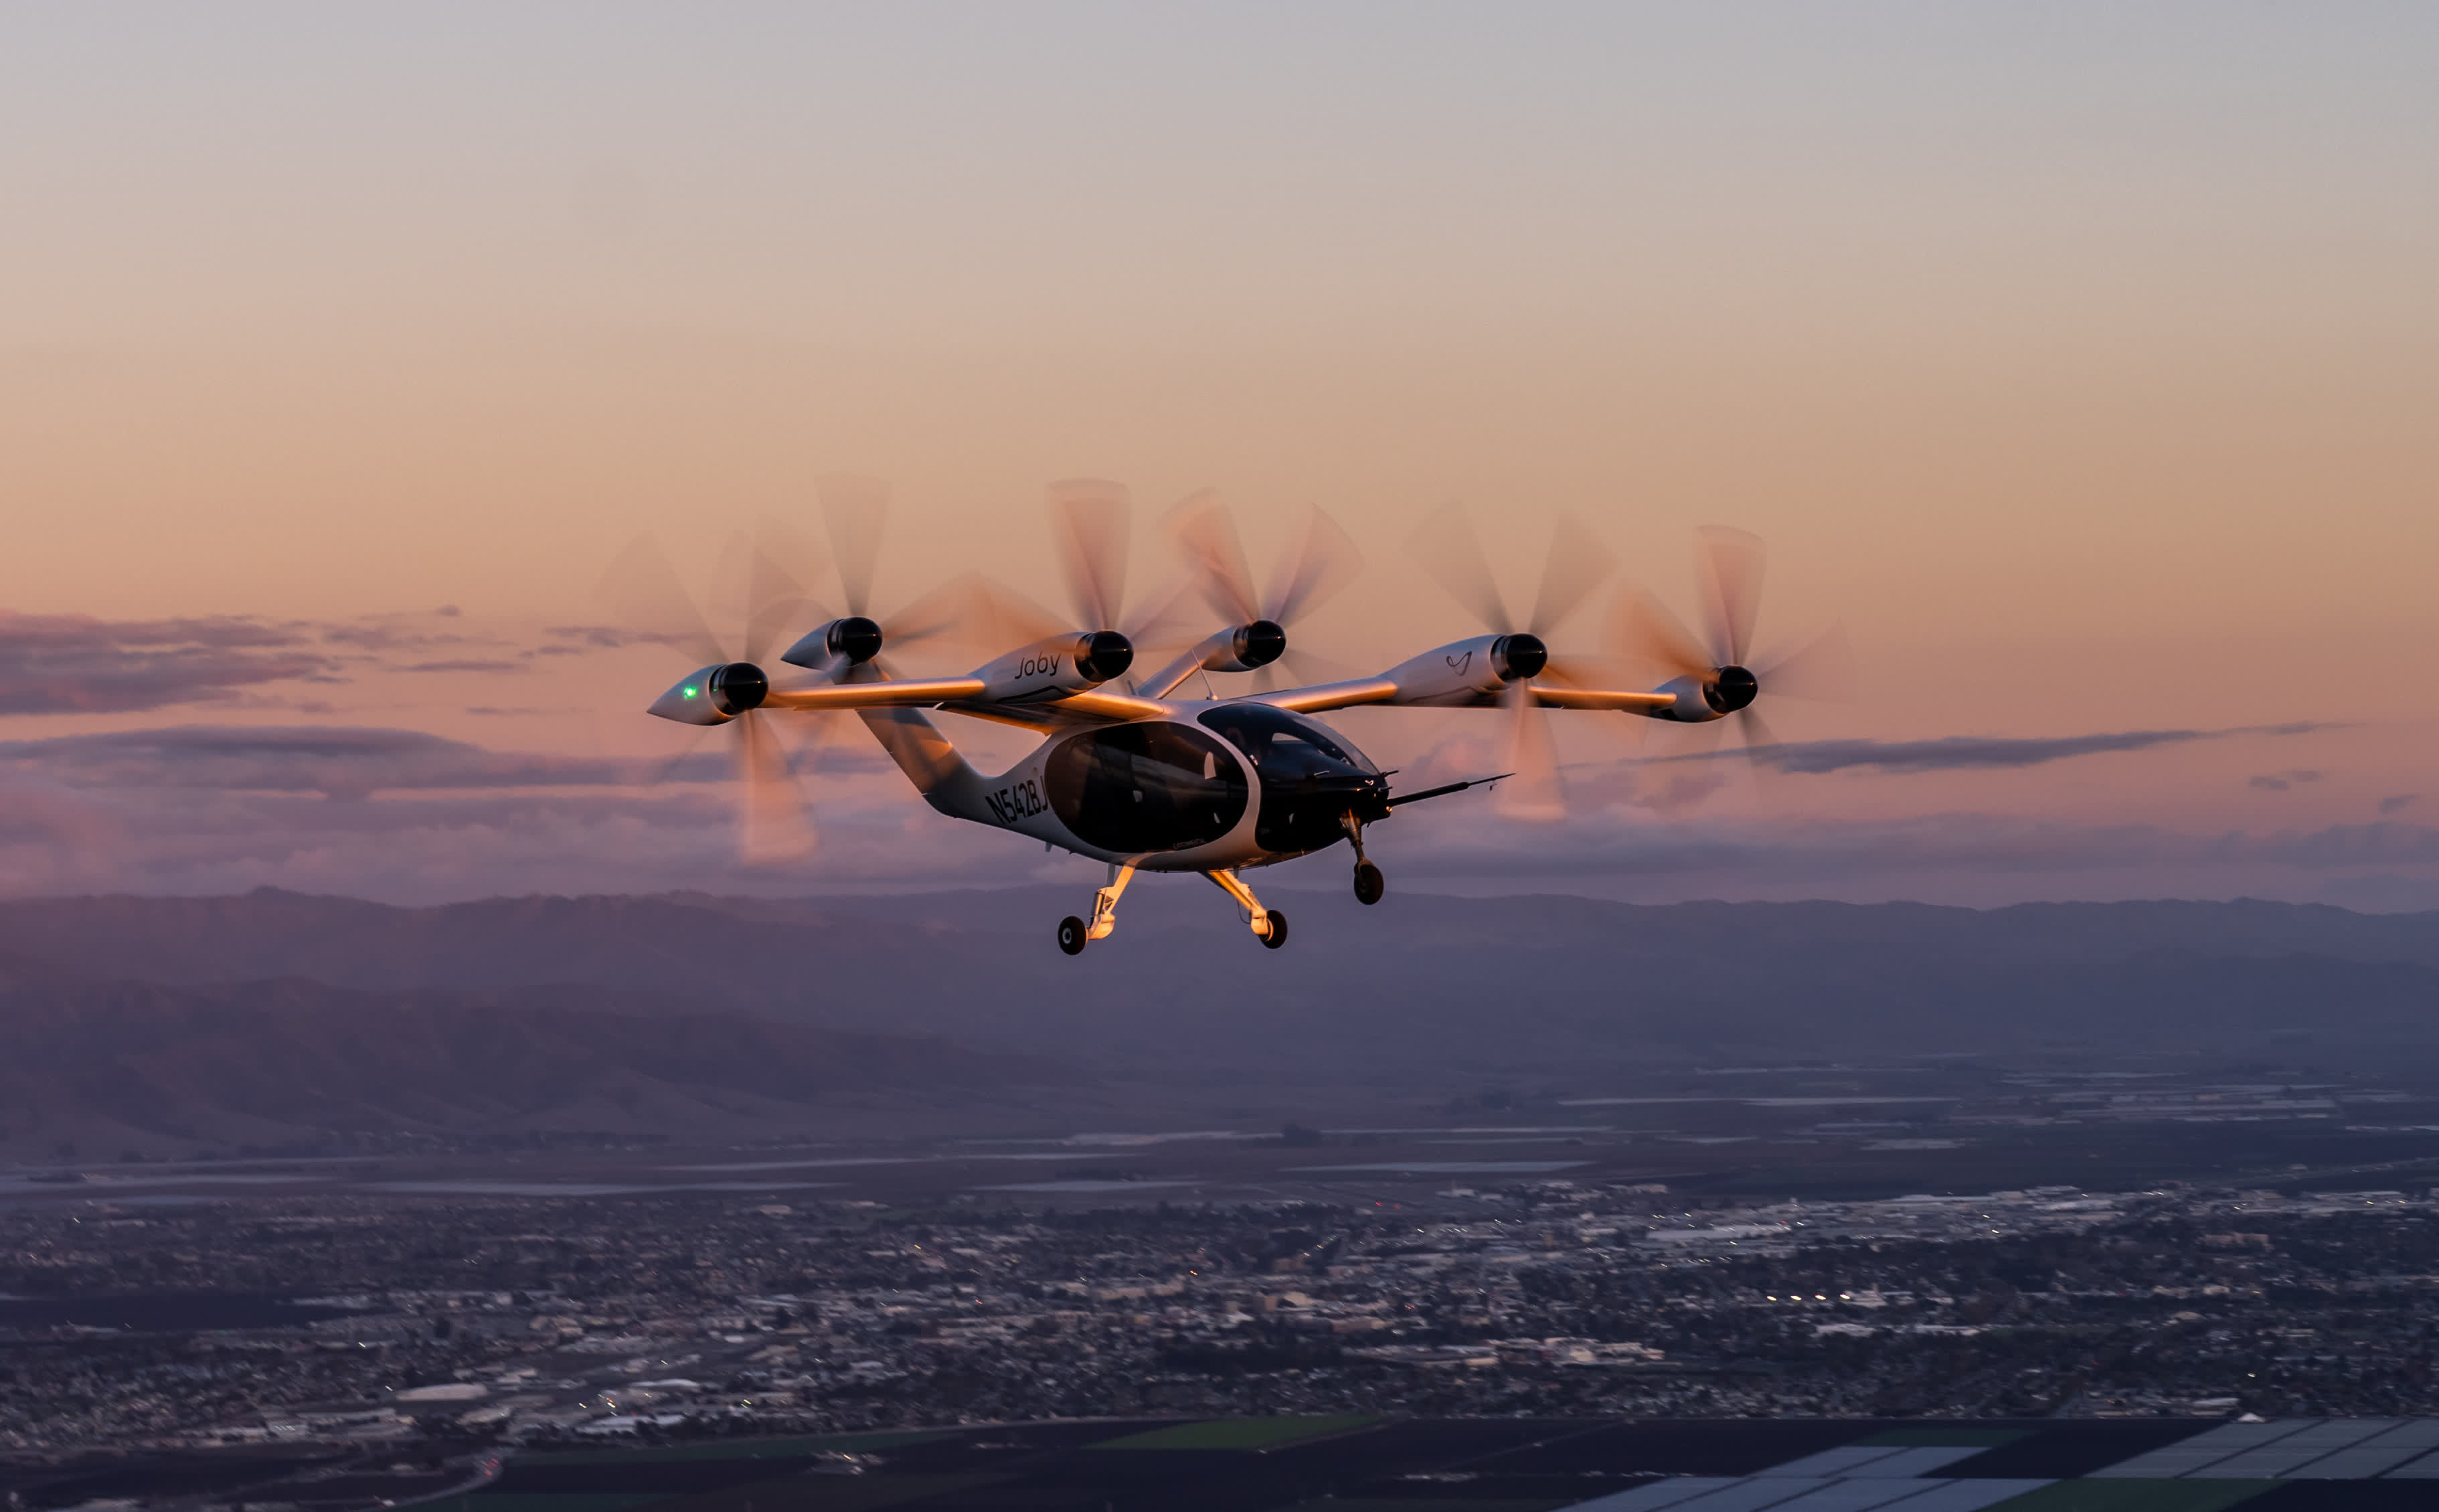 Hydrogen-powered VTOL aircraft completes groundbreaking 523-mile flight across California